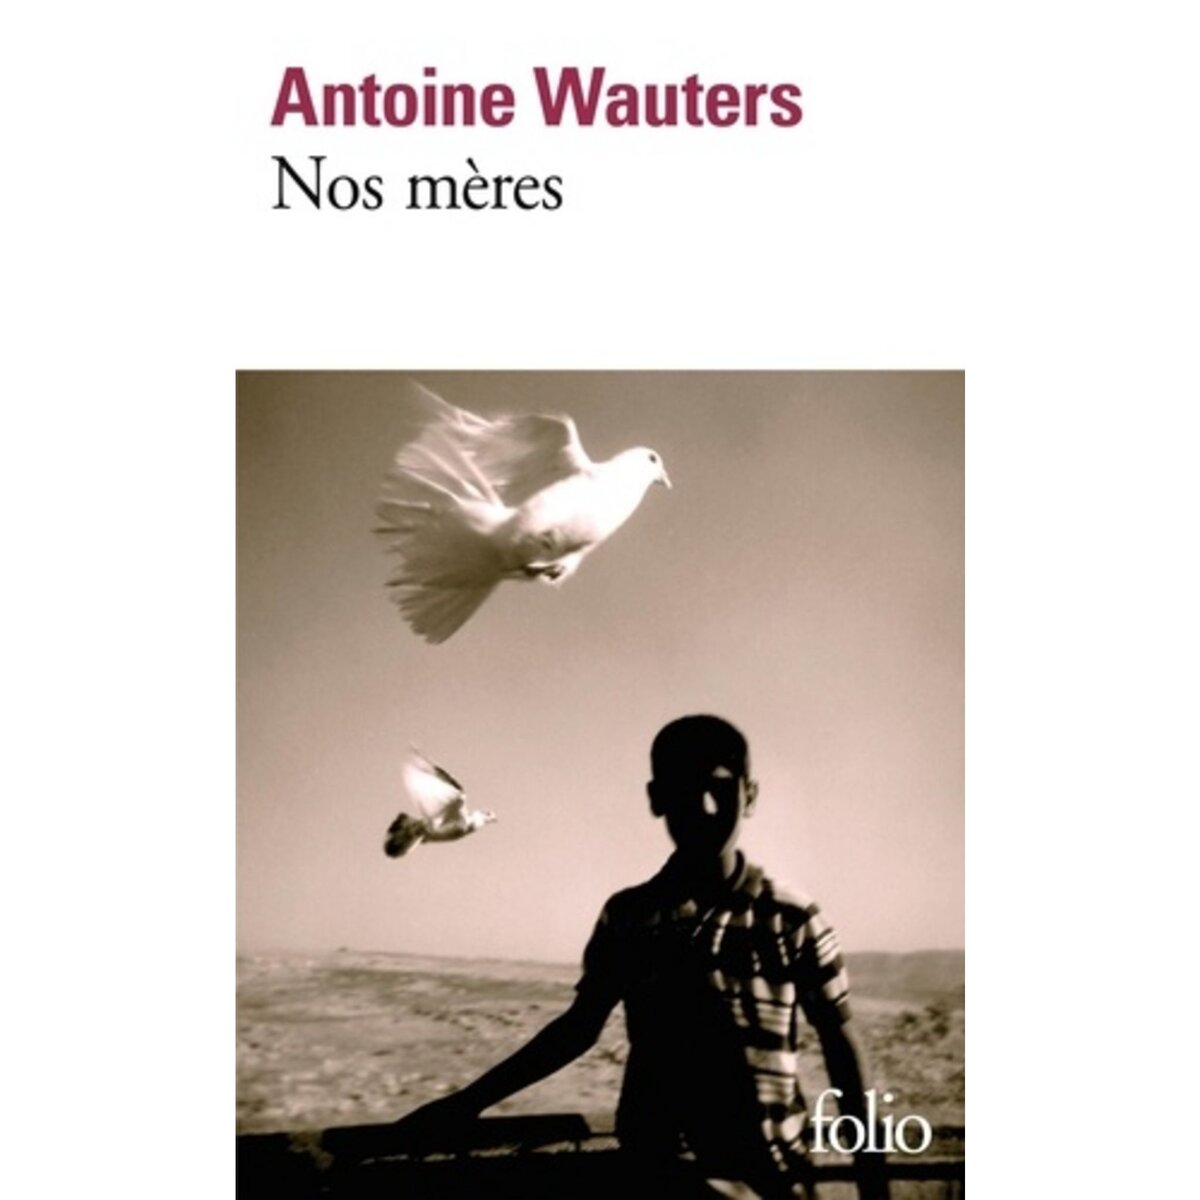  NOS MERES, Wauters Antoine